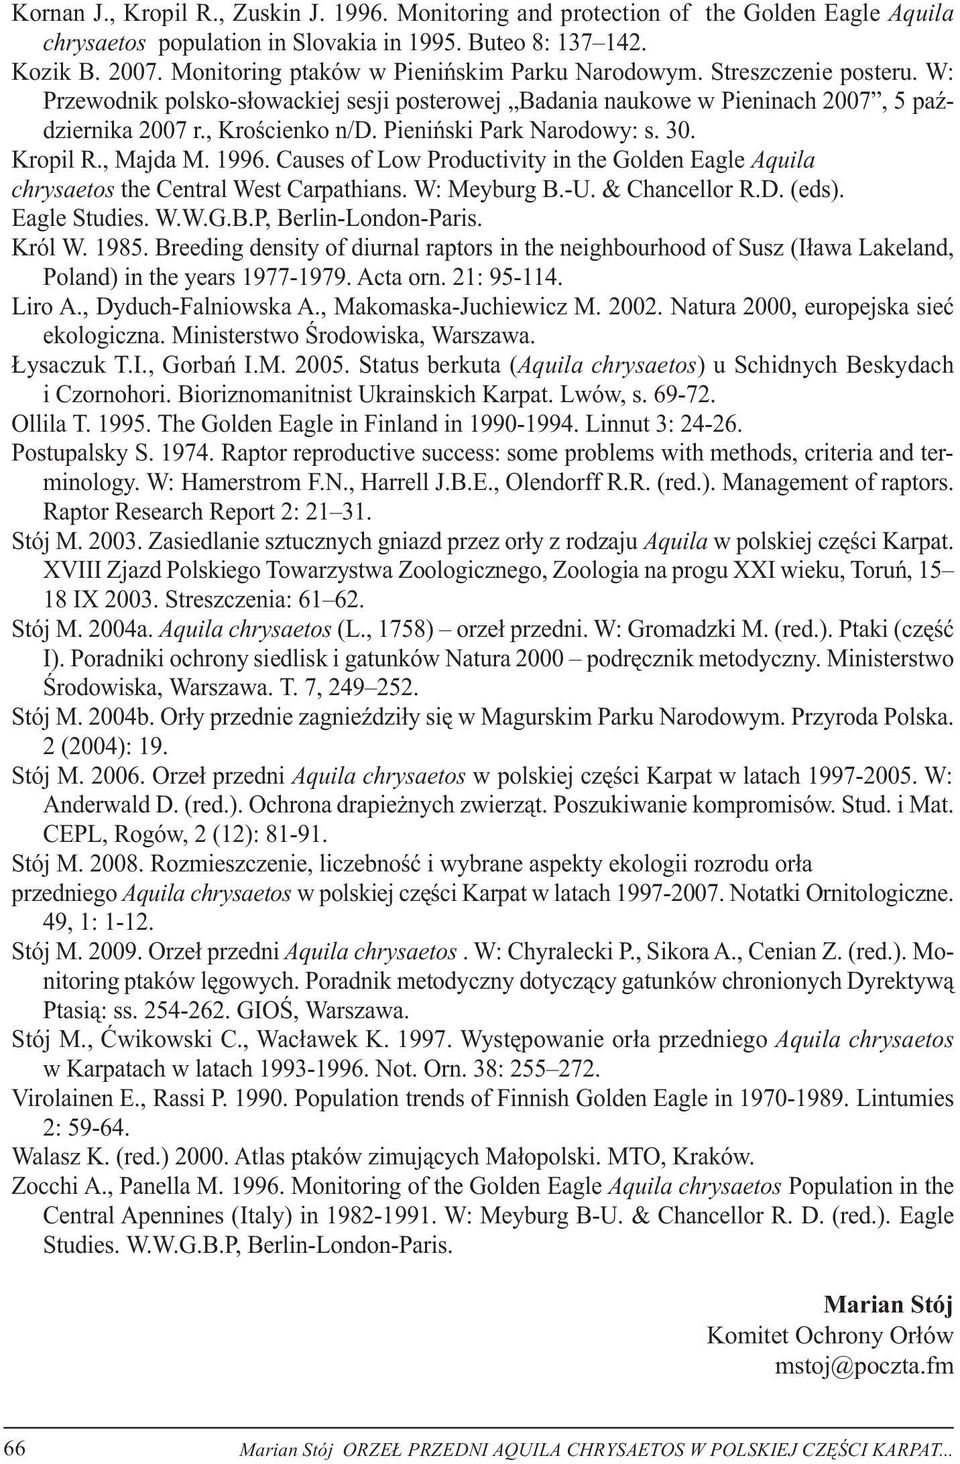 Pieniński Park Narodowy: s. 30. Kropil R., Majda M. 1996. Causes of Low Productivity in the Golden Eagle Aquila chrysaetos the Central West Carpathians. W: Meyburg B.-U. & Chancellor R.D. (eds).